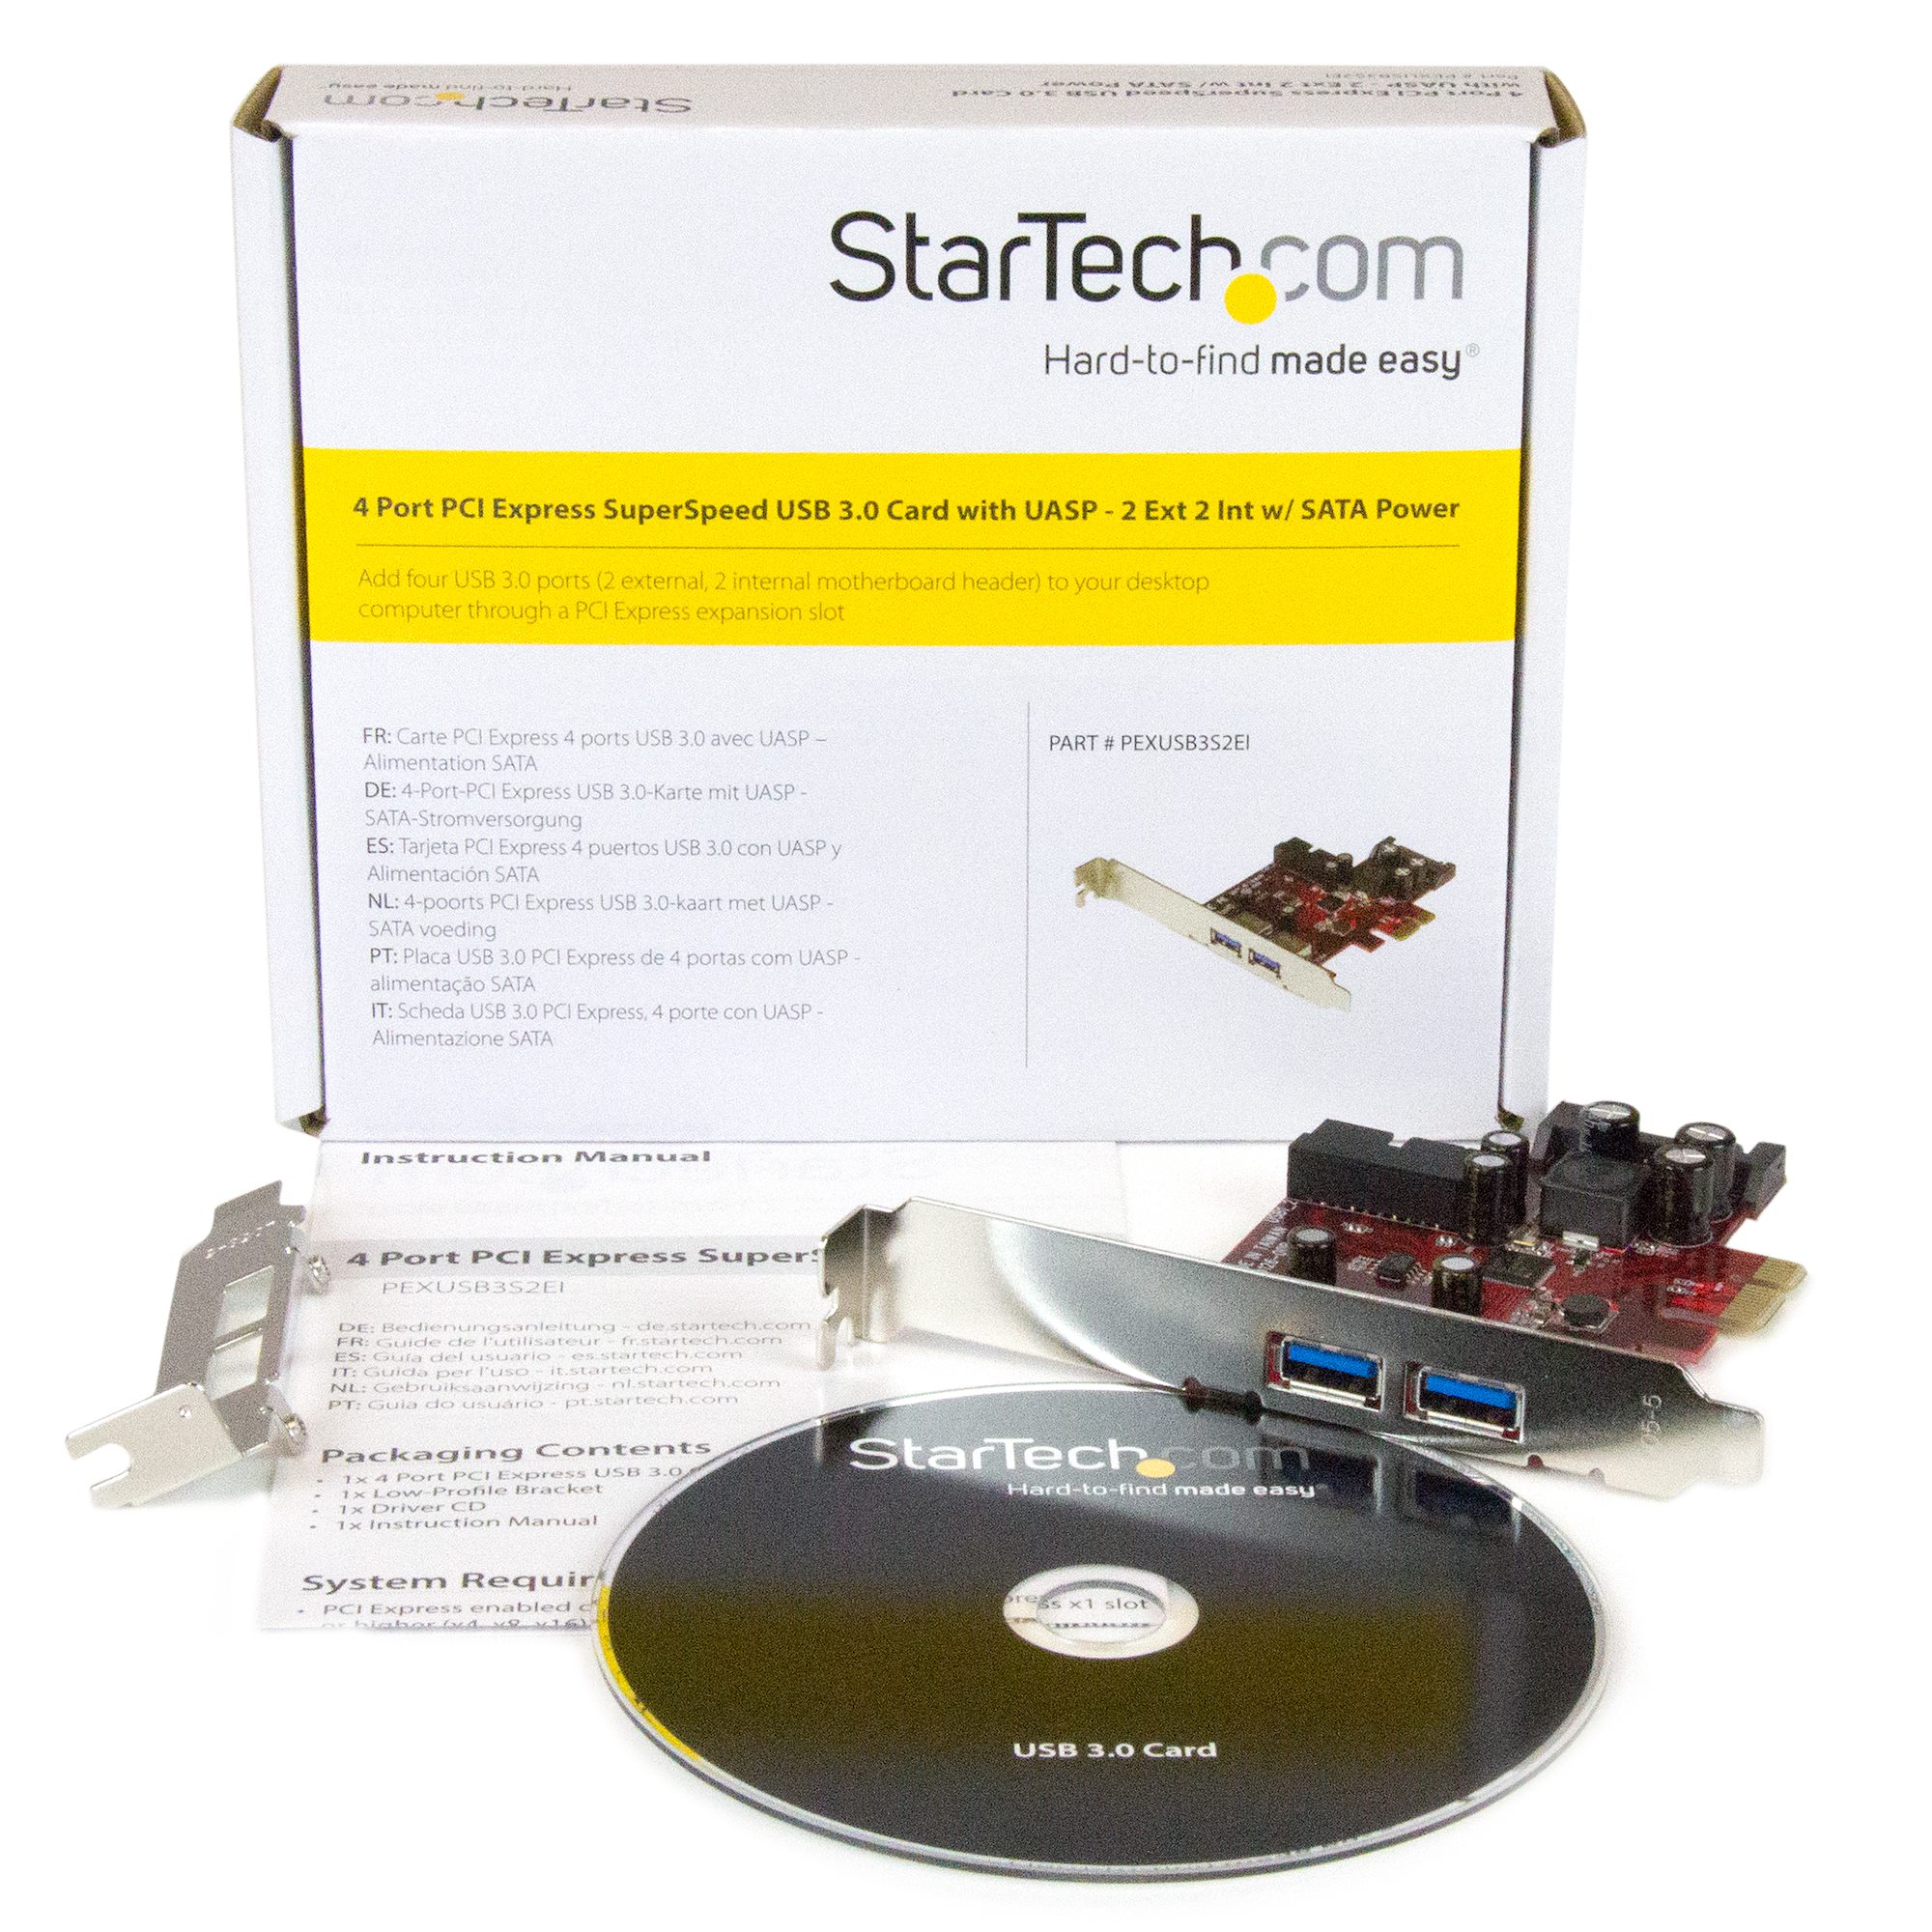 StarTech.com 4-Port PCI Express USB 3.0 Card SATA Power PEXUSB3S2EI 